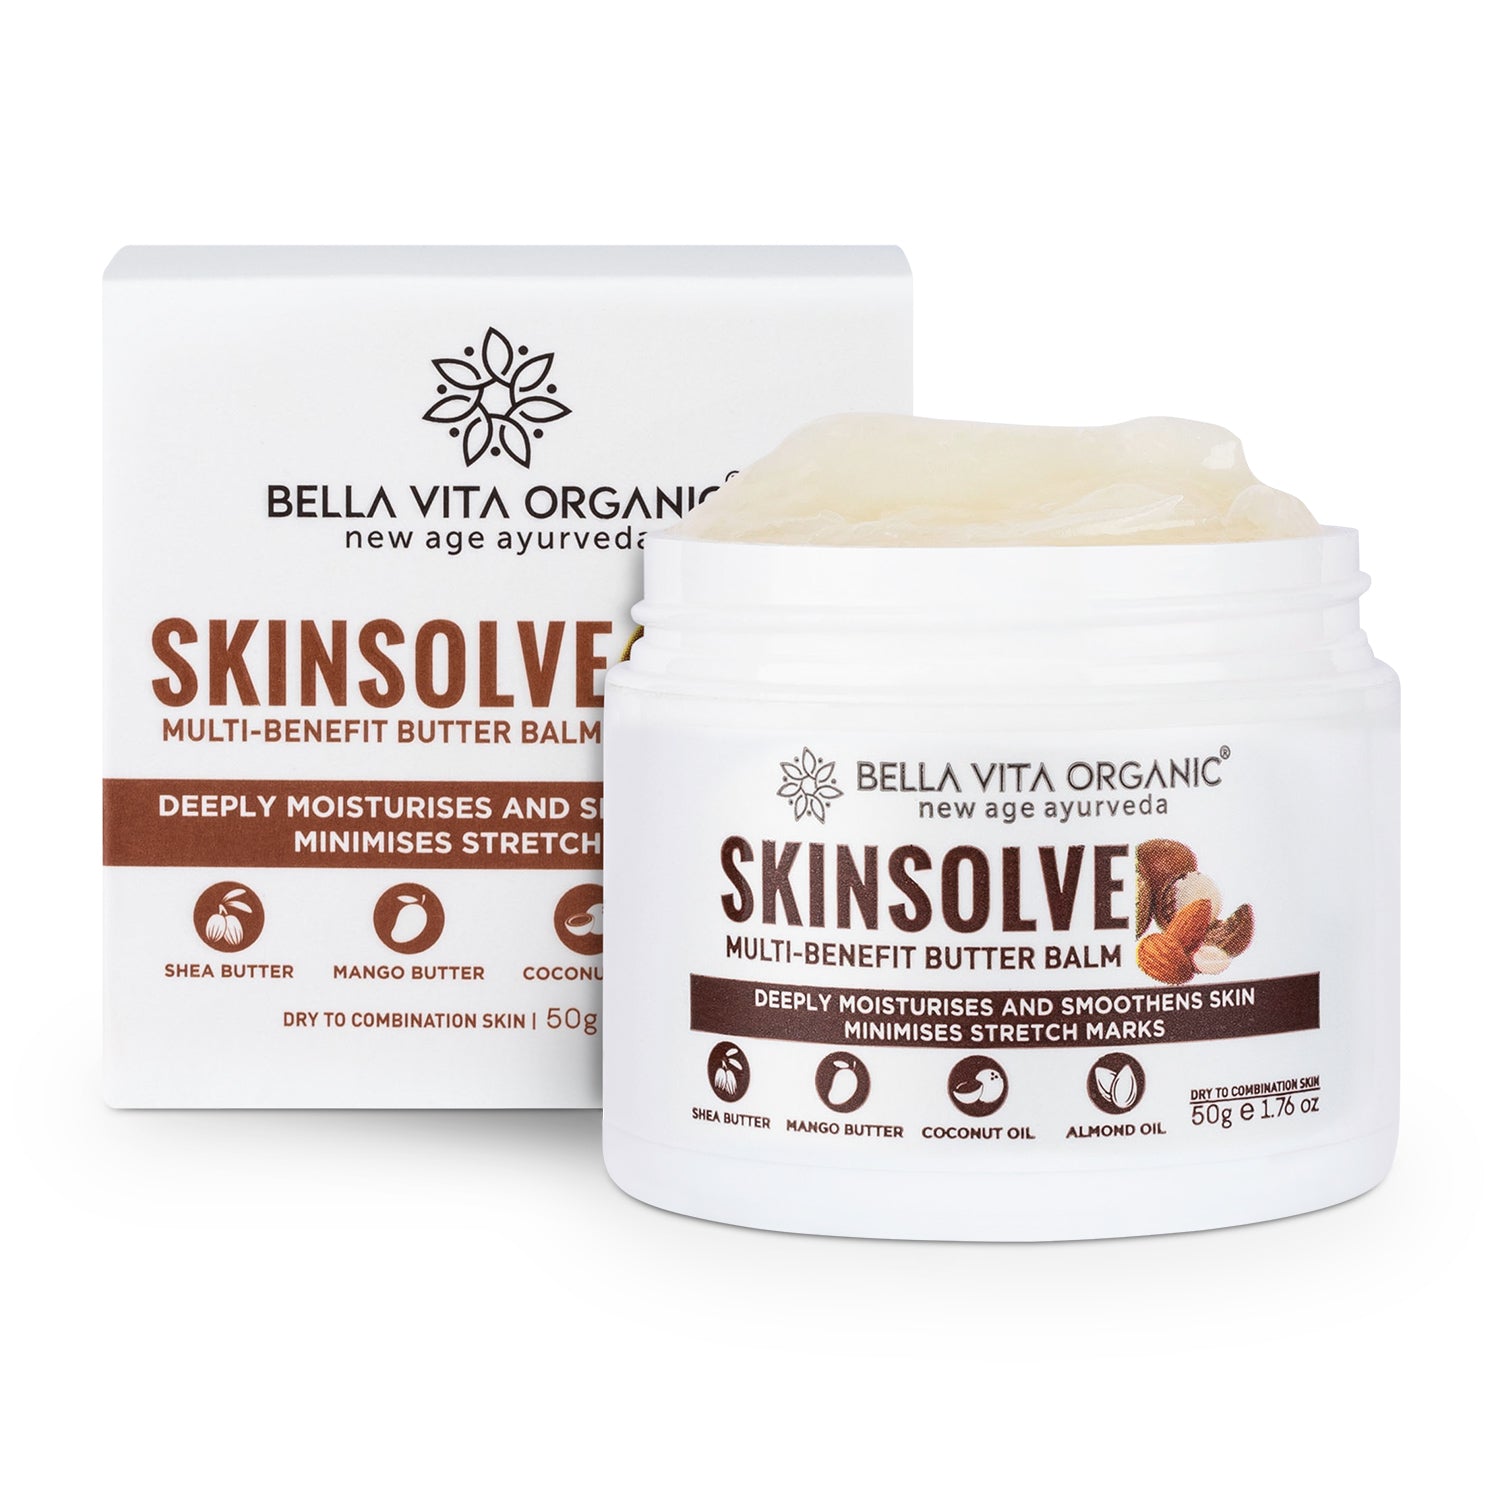 Skinsolve - Multi-Benefit Butter Balm